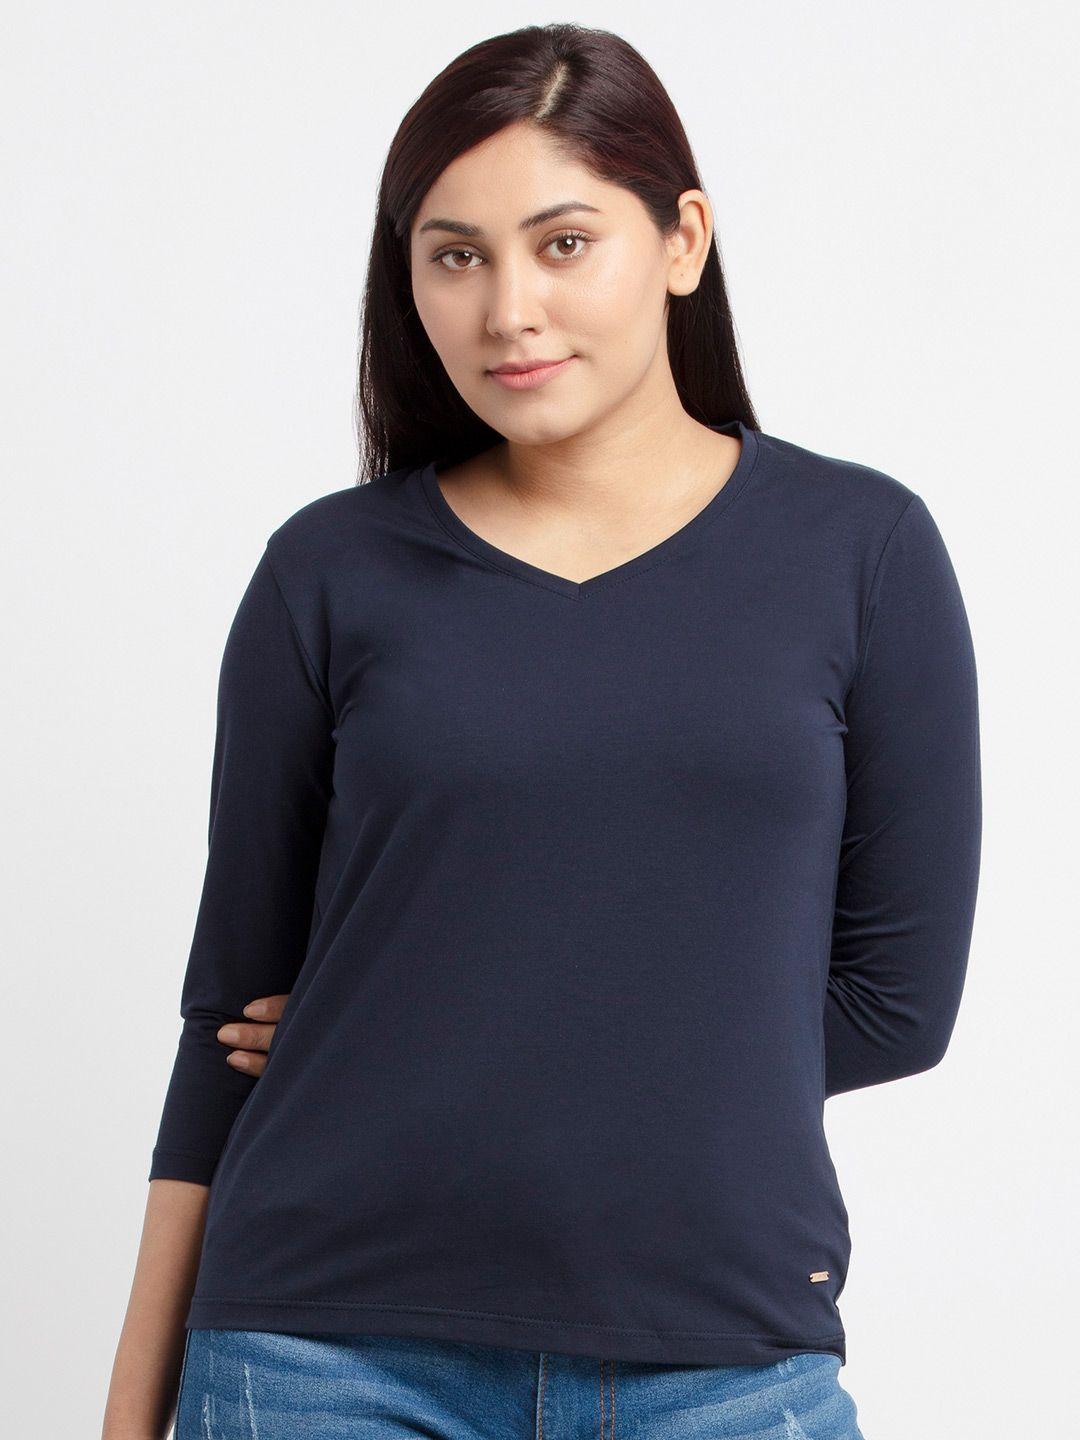 status quo women navy blue v-neck cotton t-shirt